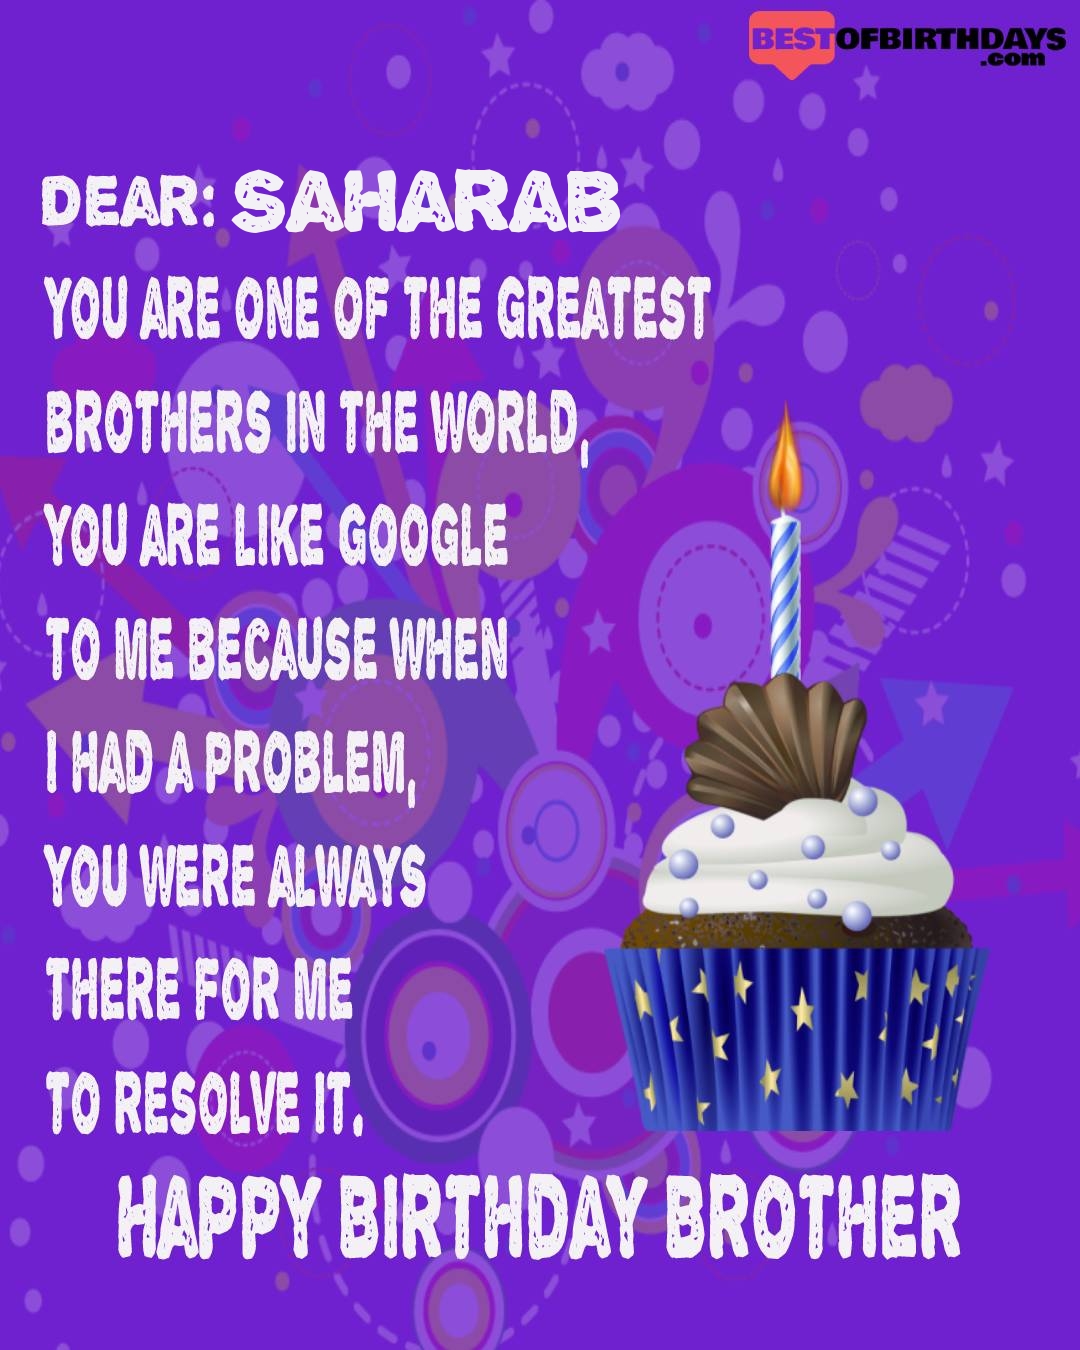 Happy birthday saharab bhai brother bro